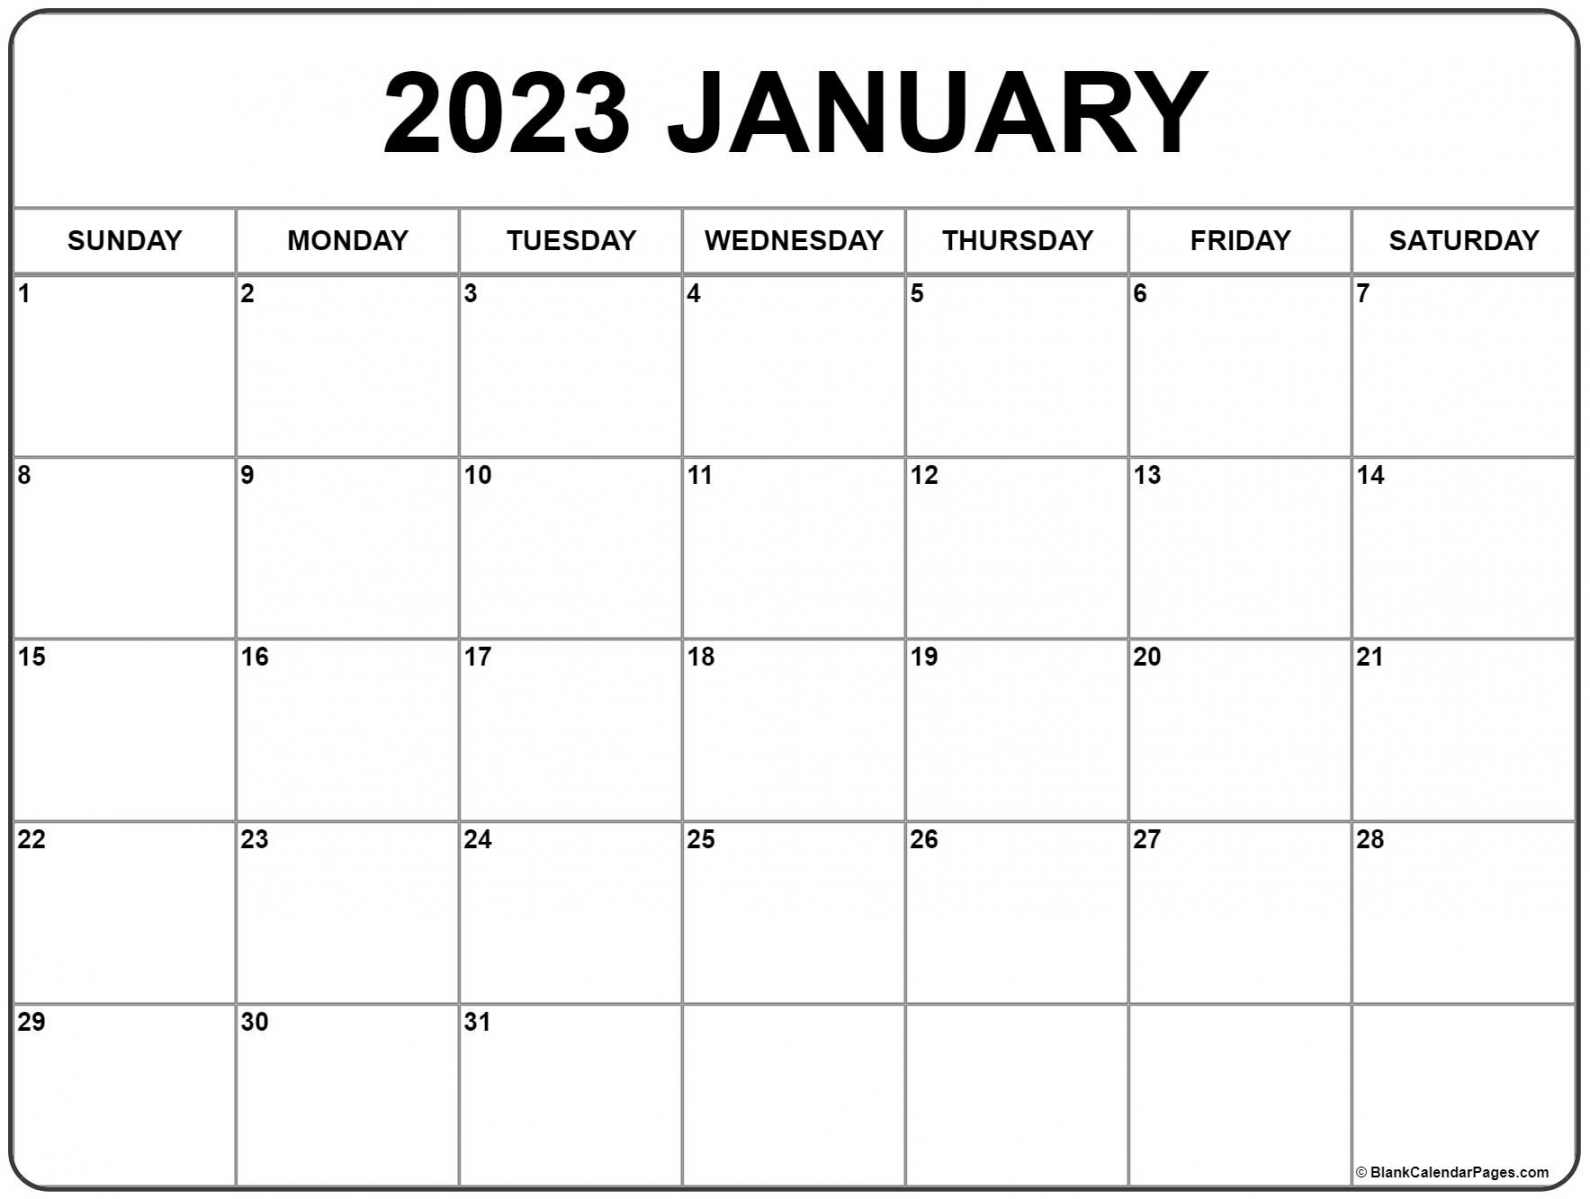 January  calendar  free printable calendar - FREE Printables - Free Printable Monthly January 2023 Calendar